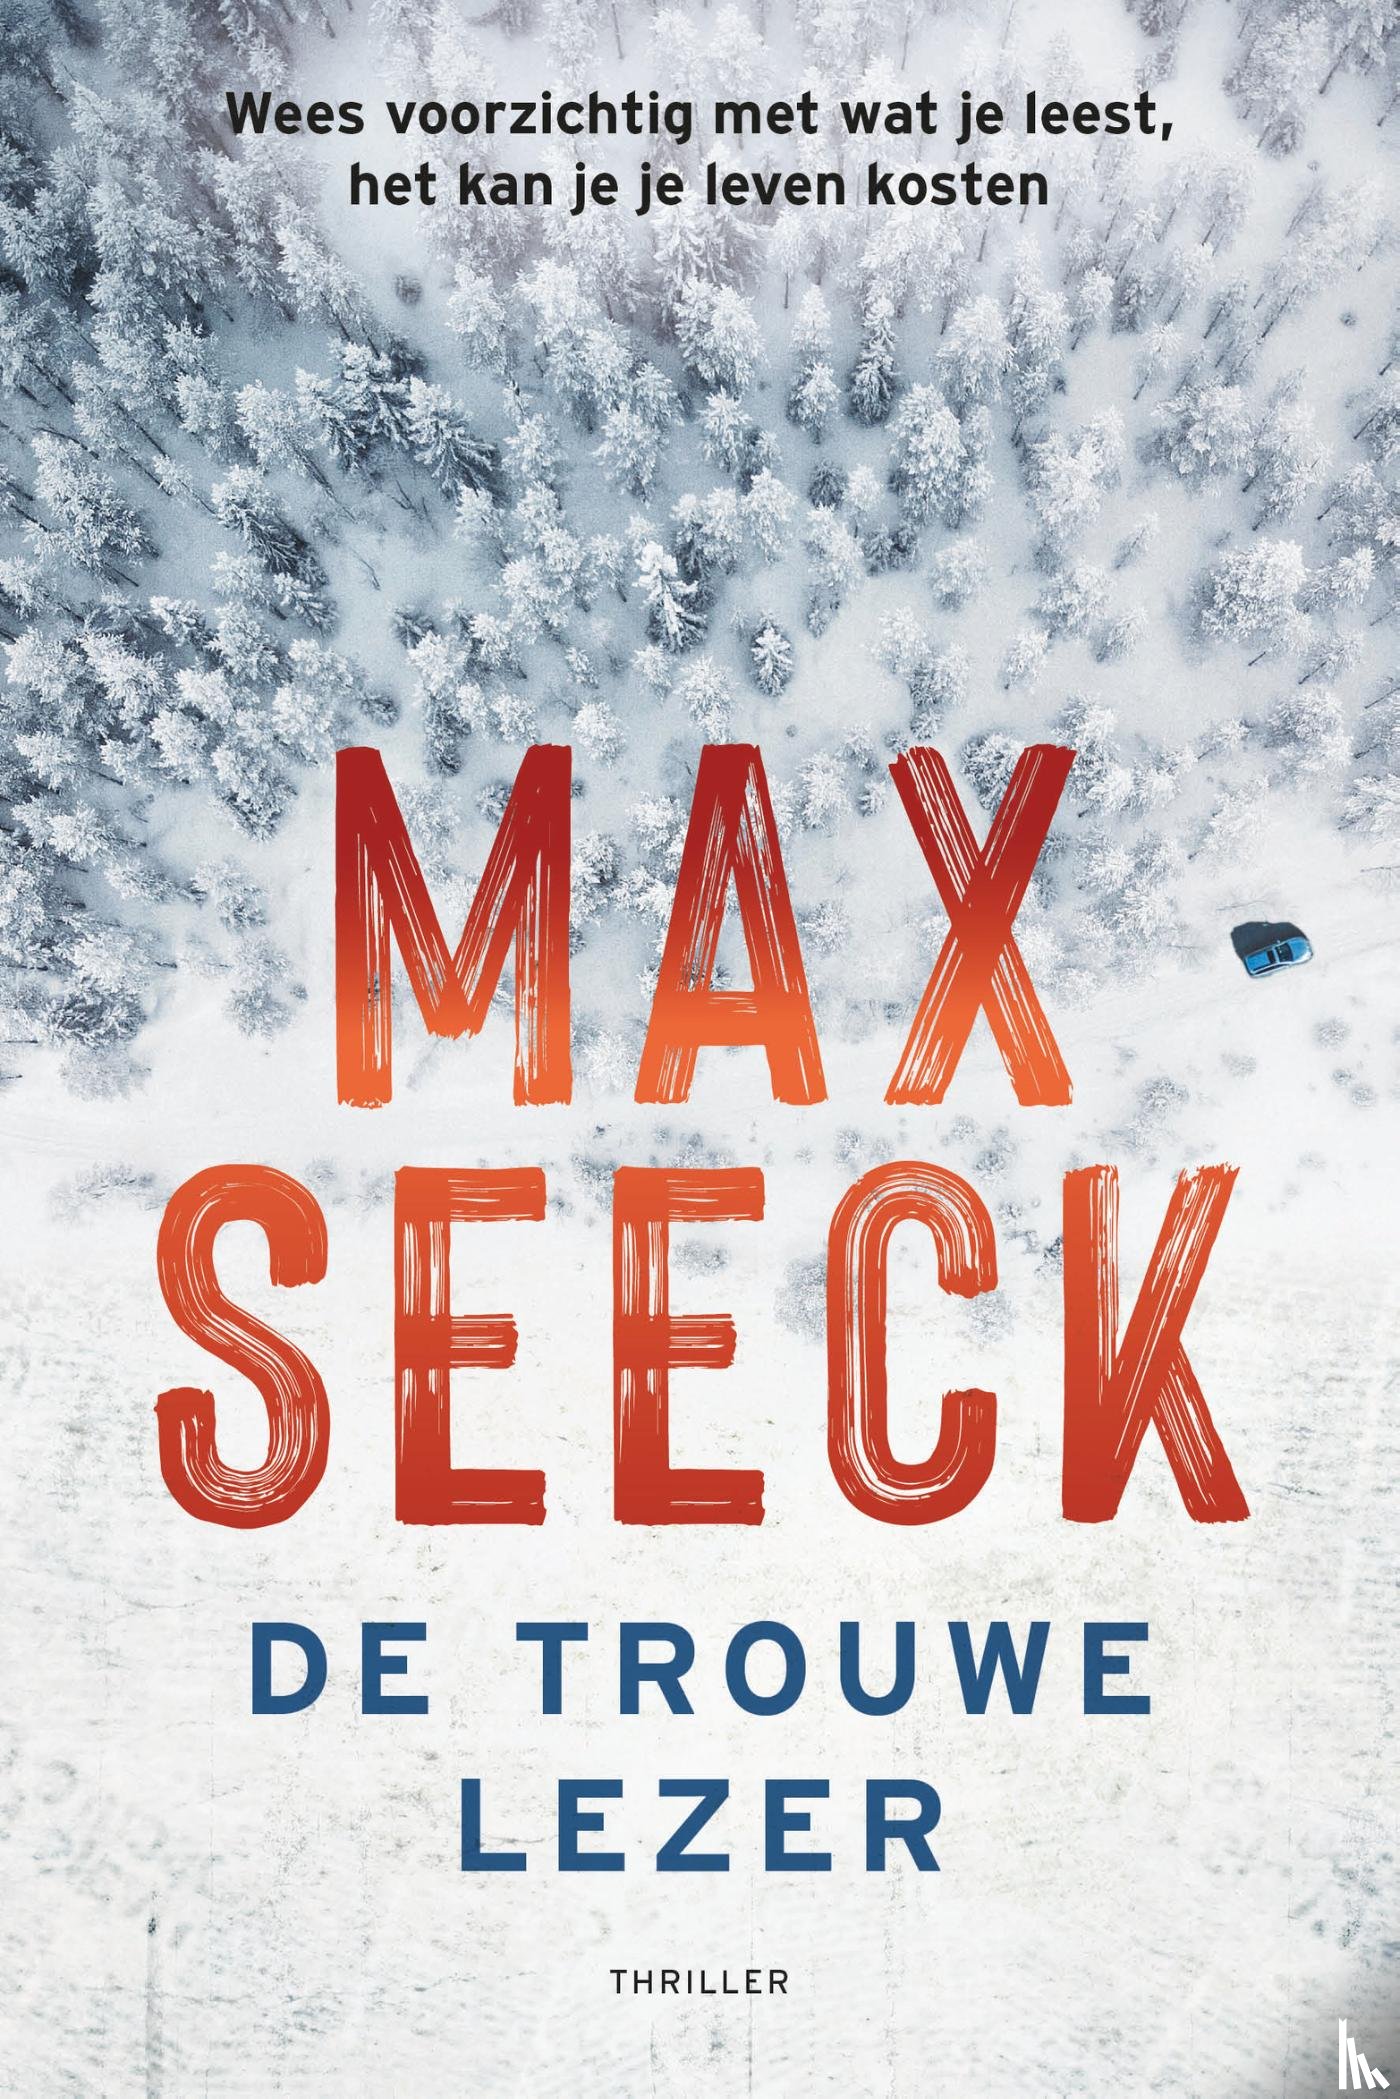 Seeck, Max - De trouwe lezer